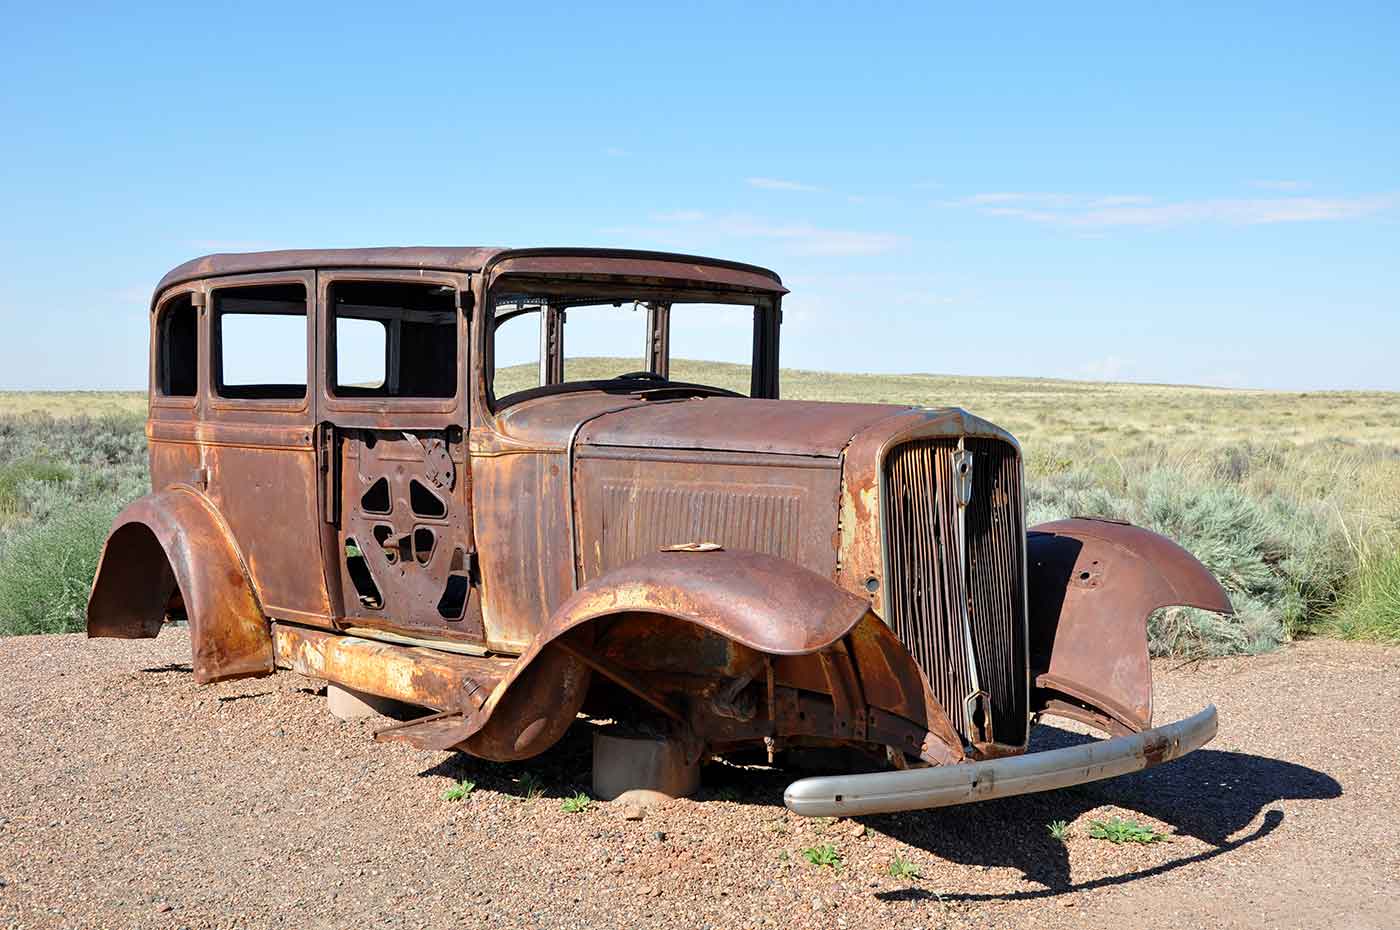 Rusted car